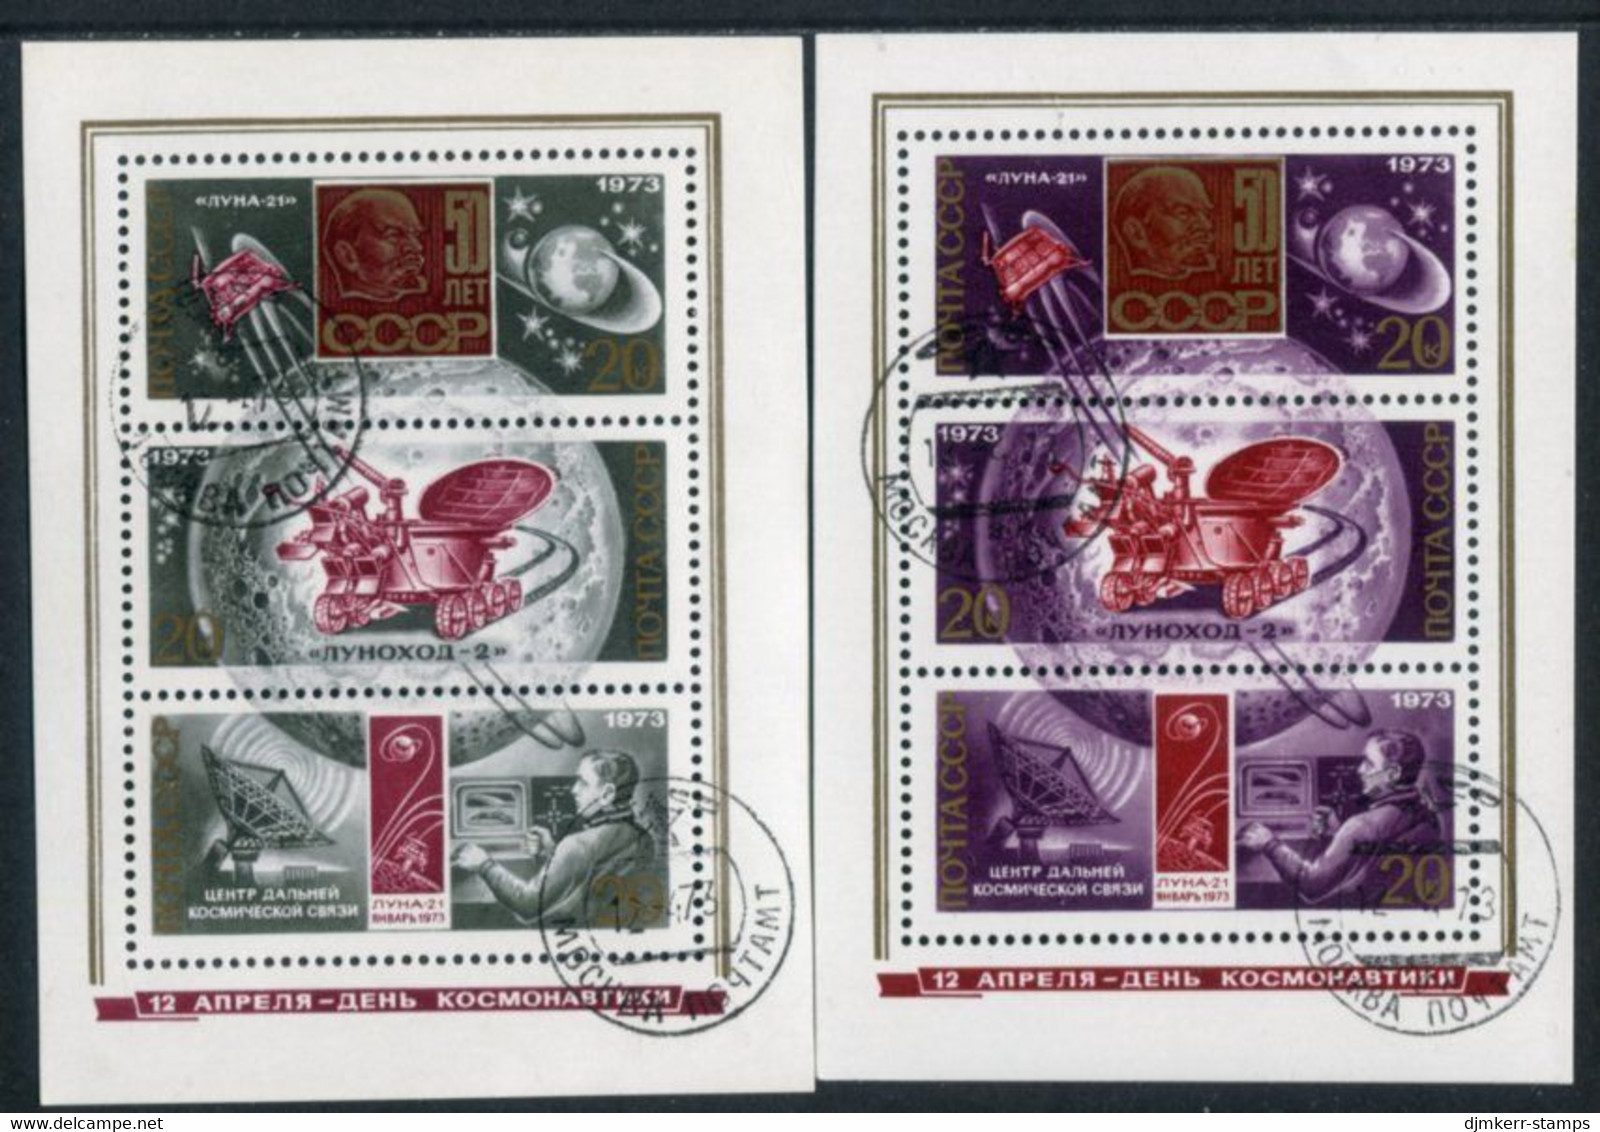 SOVIET UNION 1973 Cosmonauts Day  Blocks Used.  Michel Block 85-86 - Used Stamps